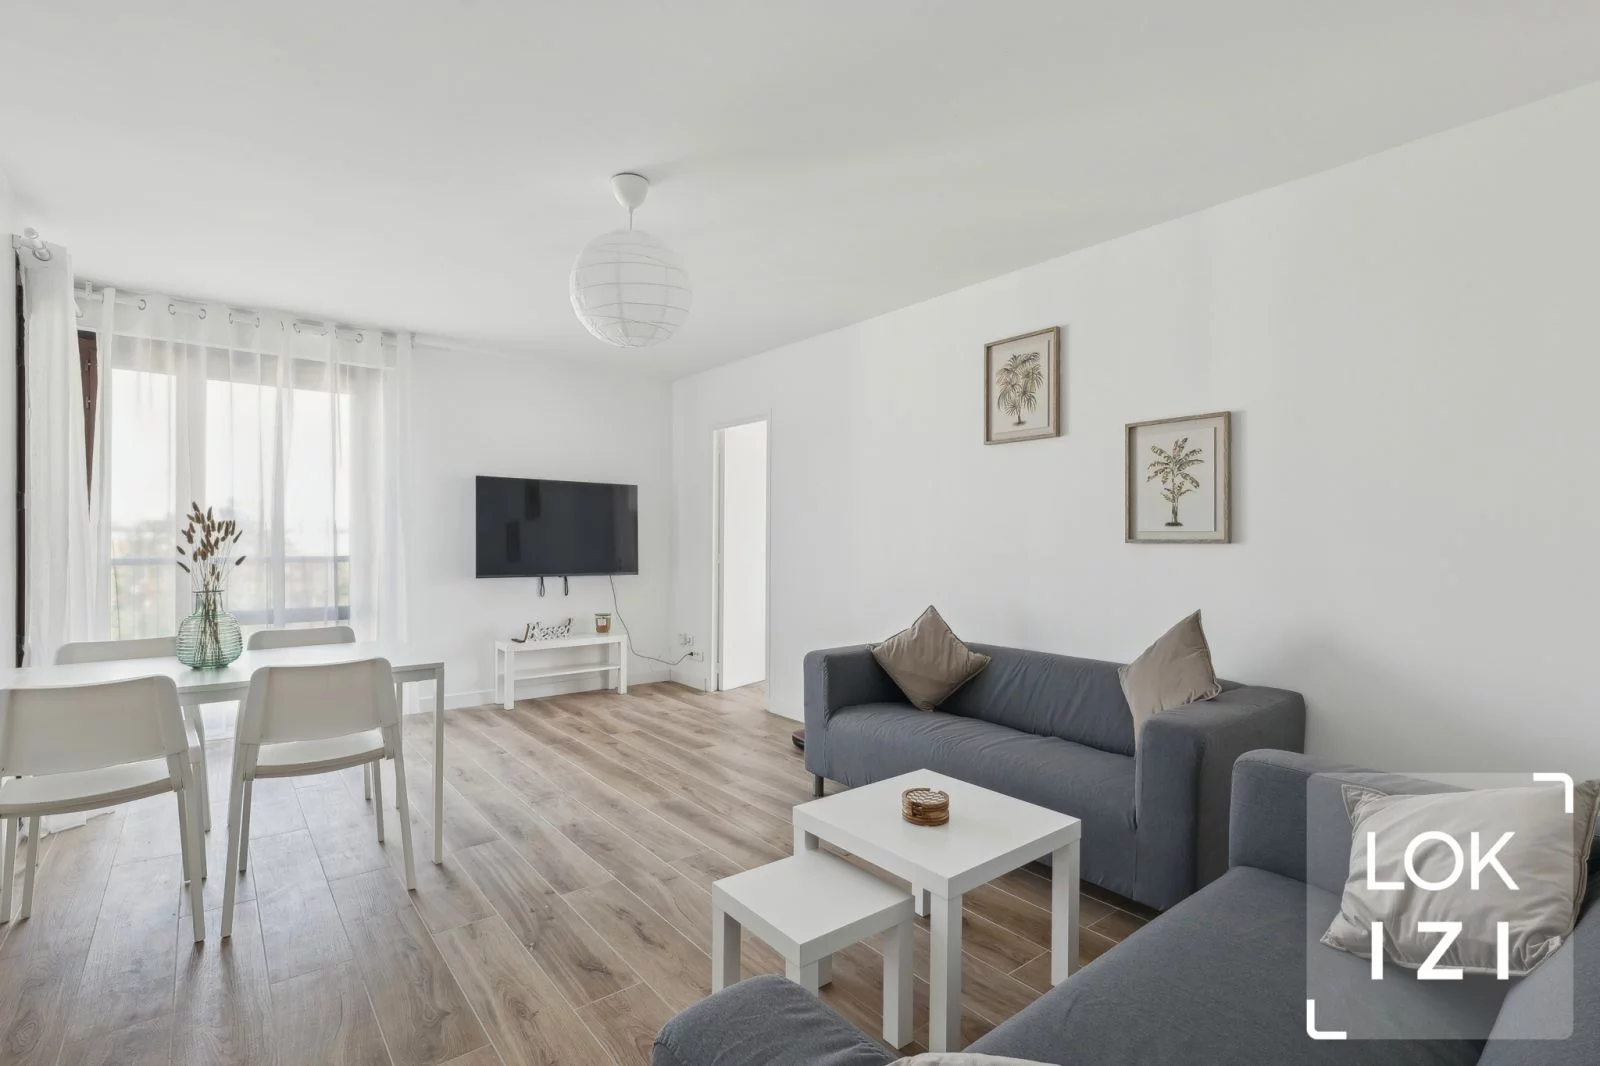 Location appartement meubl 4 pices 73m (Toulouse sud)